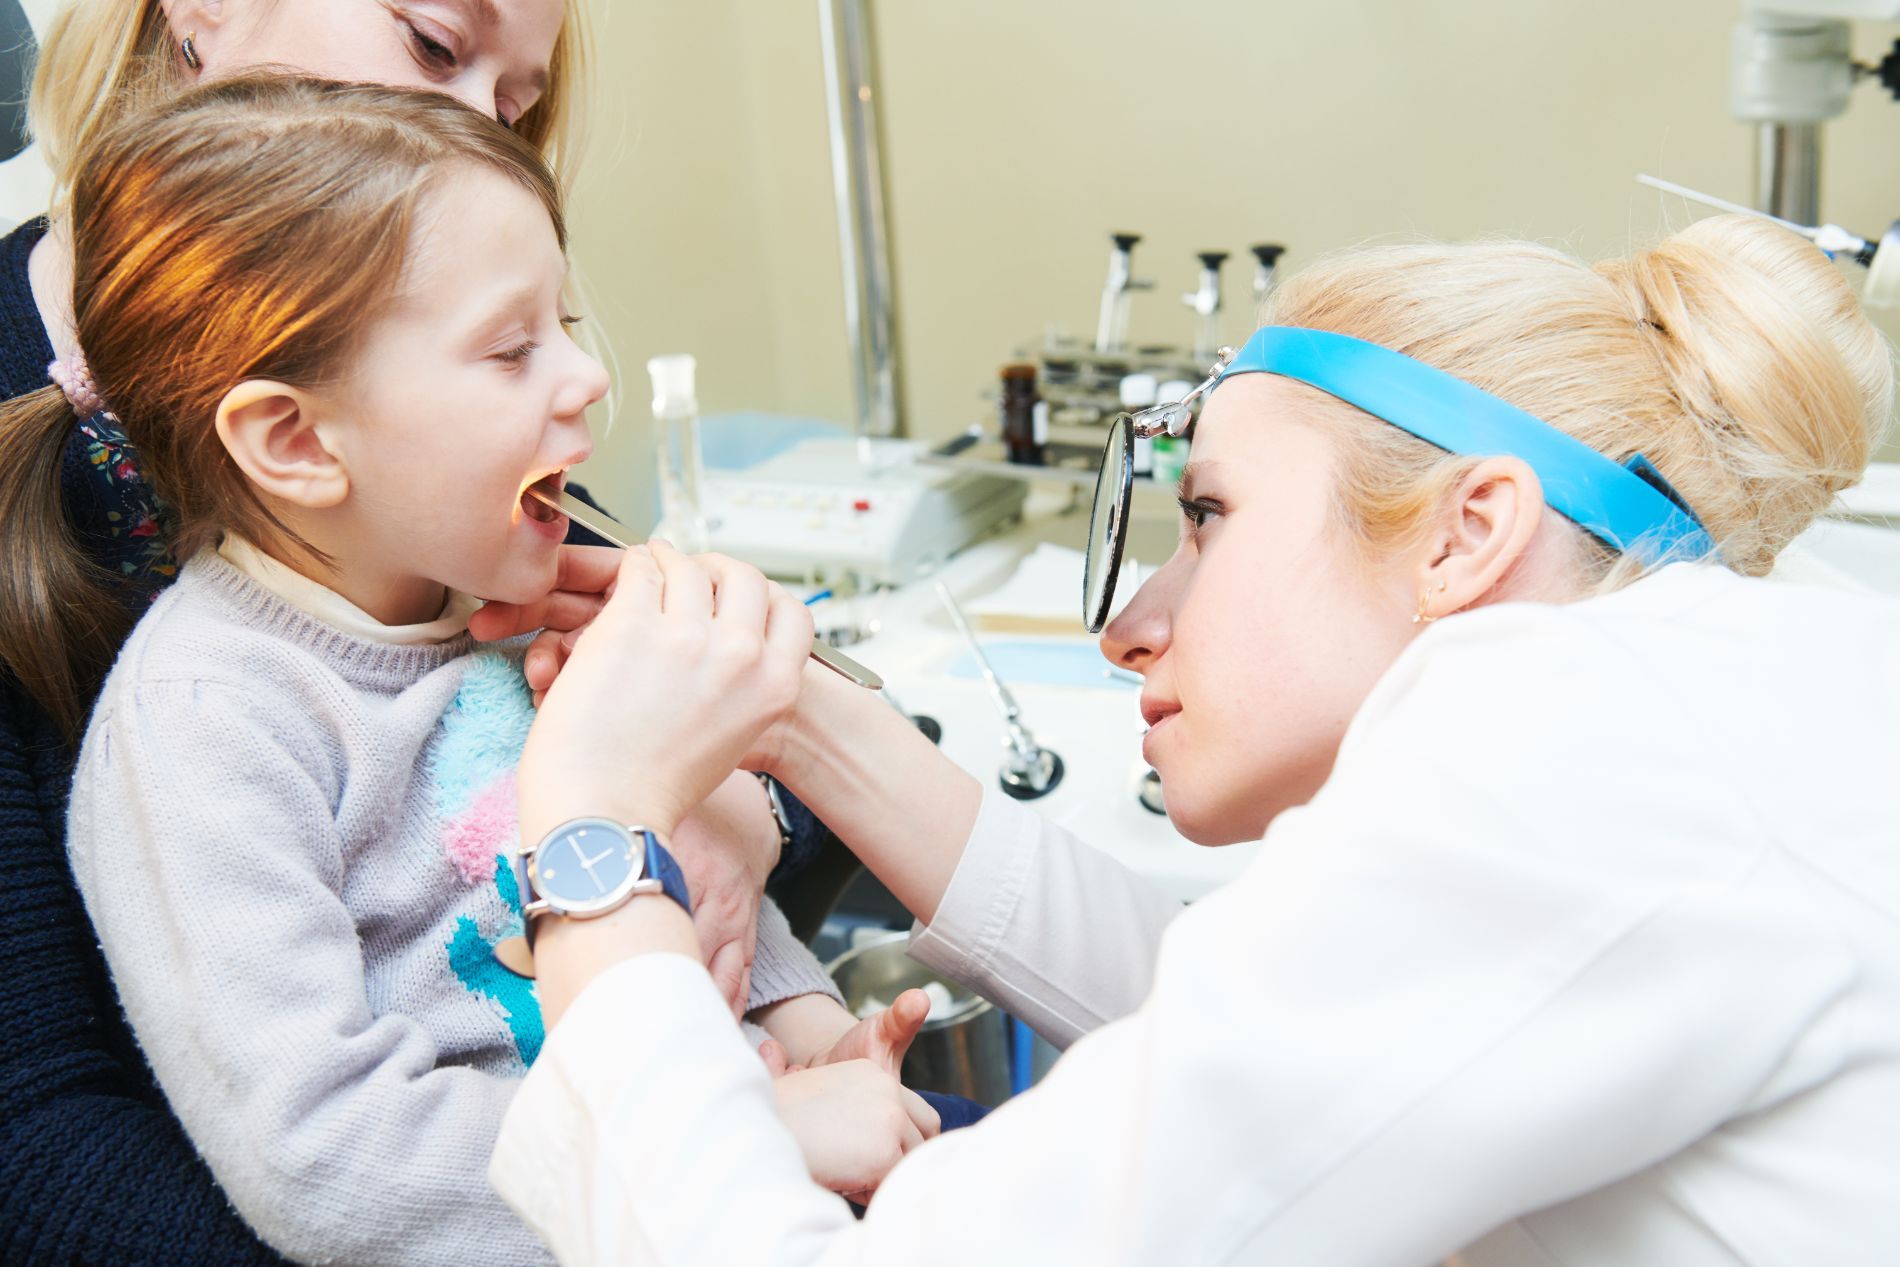 Examination on a child's throat